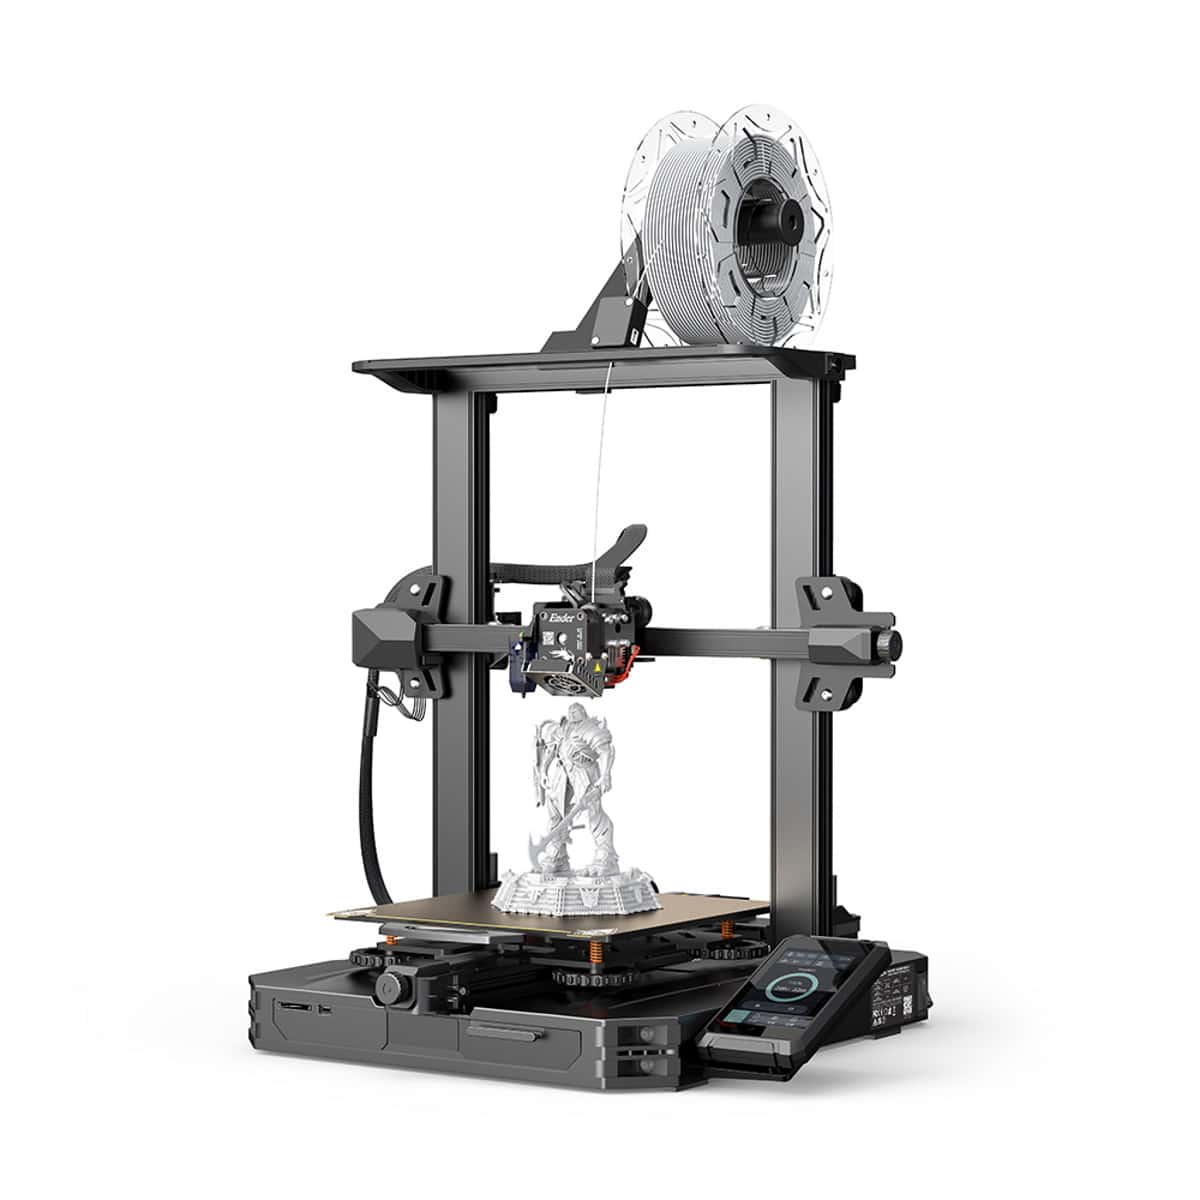 Køb Creality Ender 3 S1 Pro 3d printer - Pris 3499.00 kr.